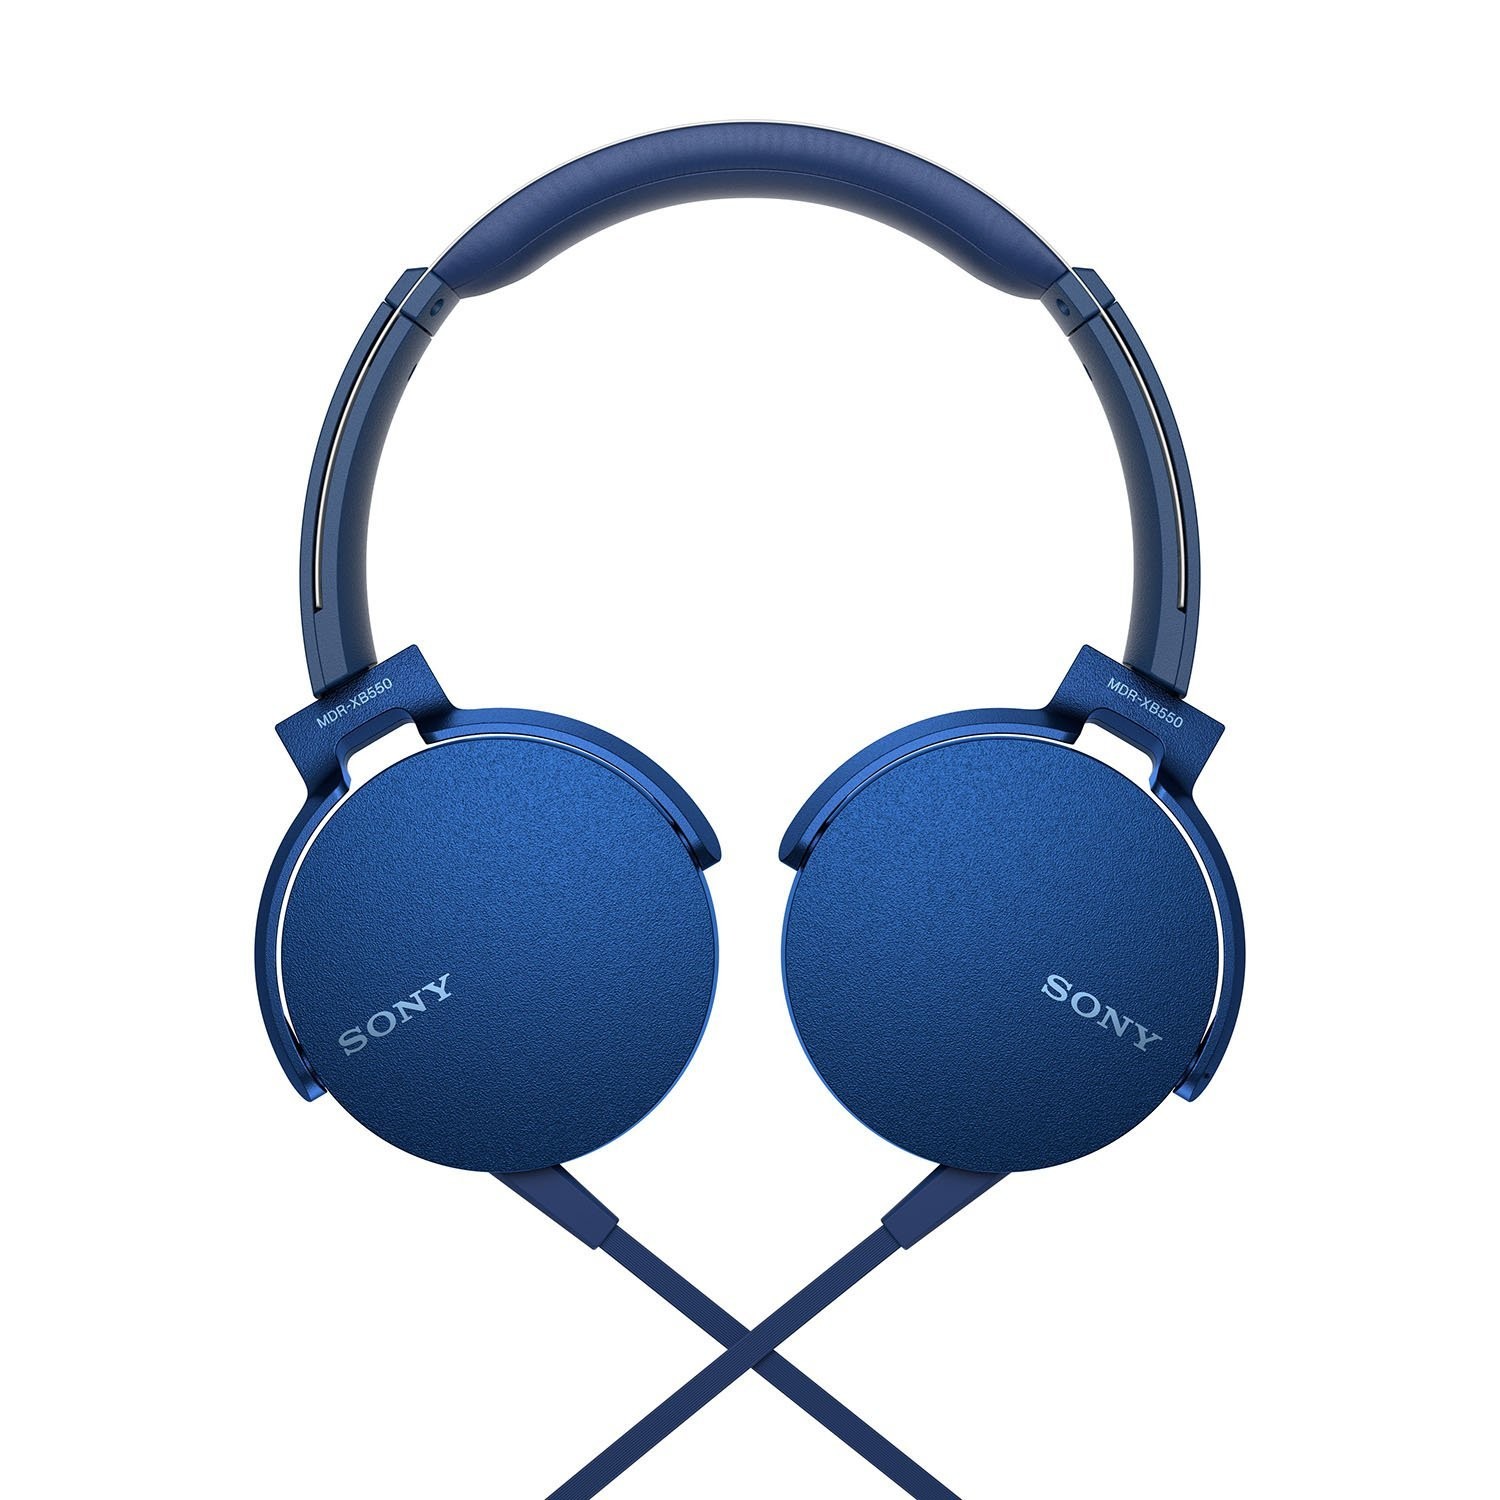 Sony Extra Bass MDR-XB550AP On-Ear Headphones,Blue